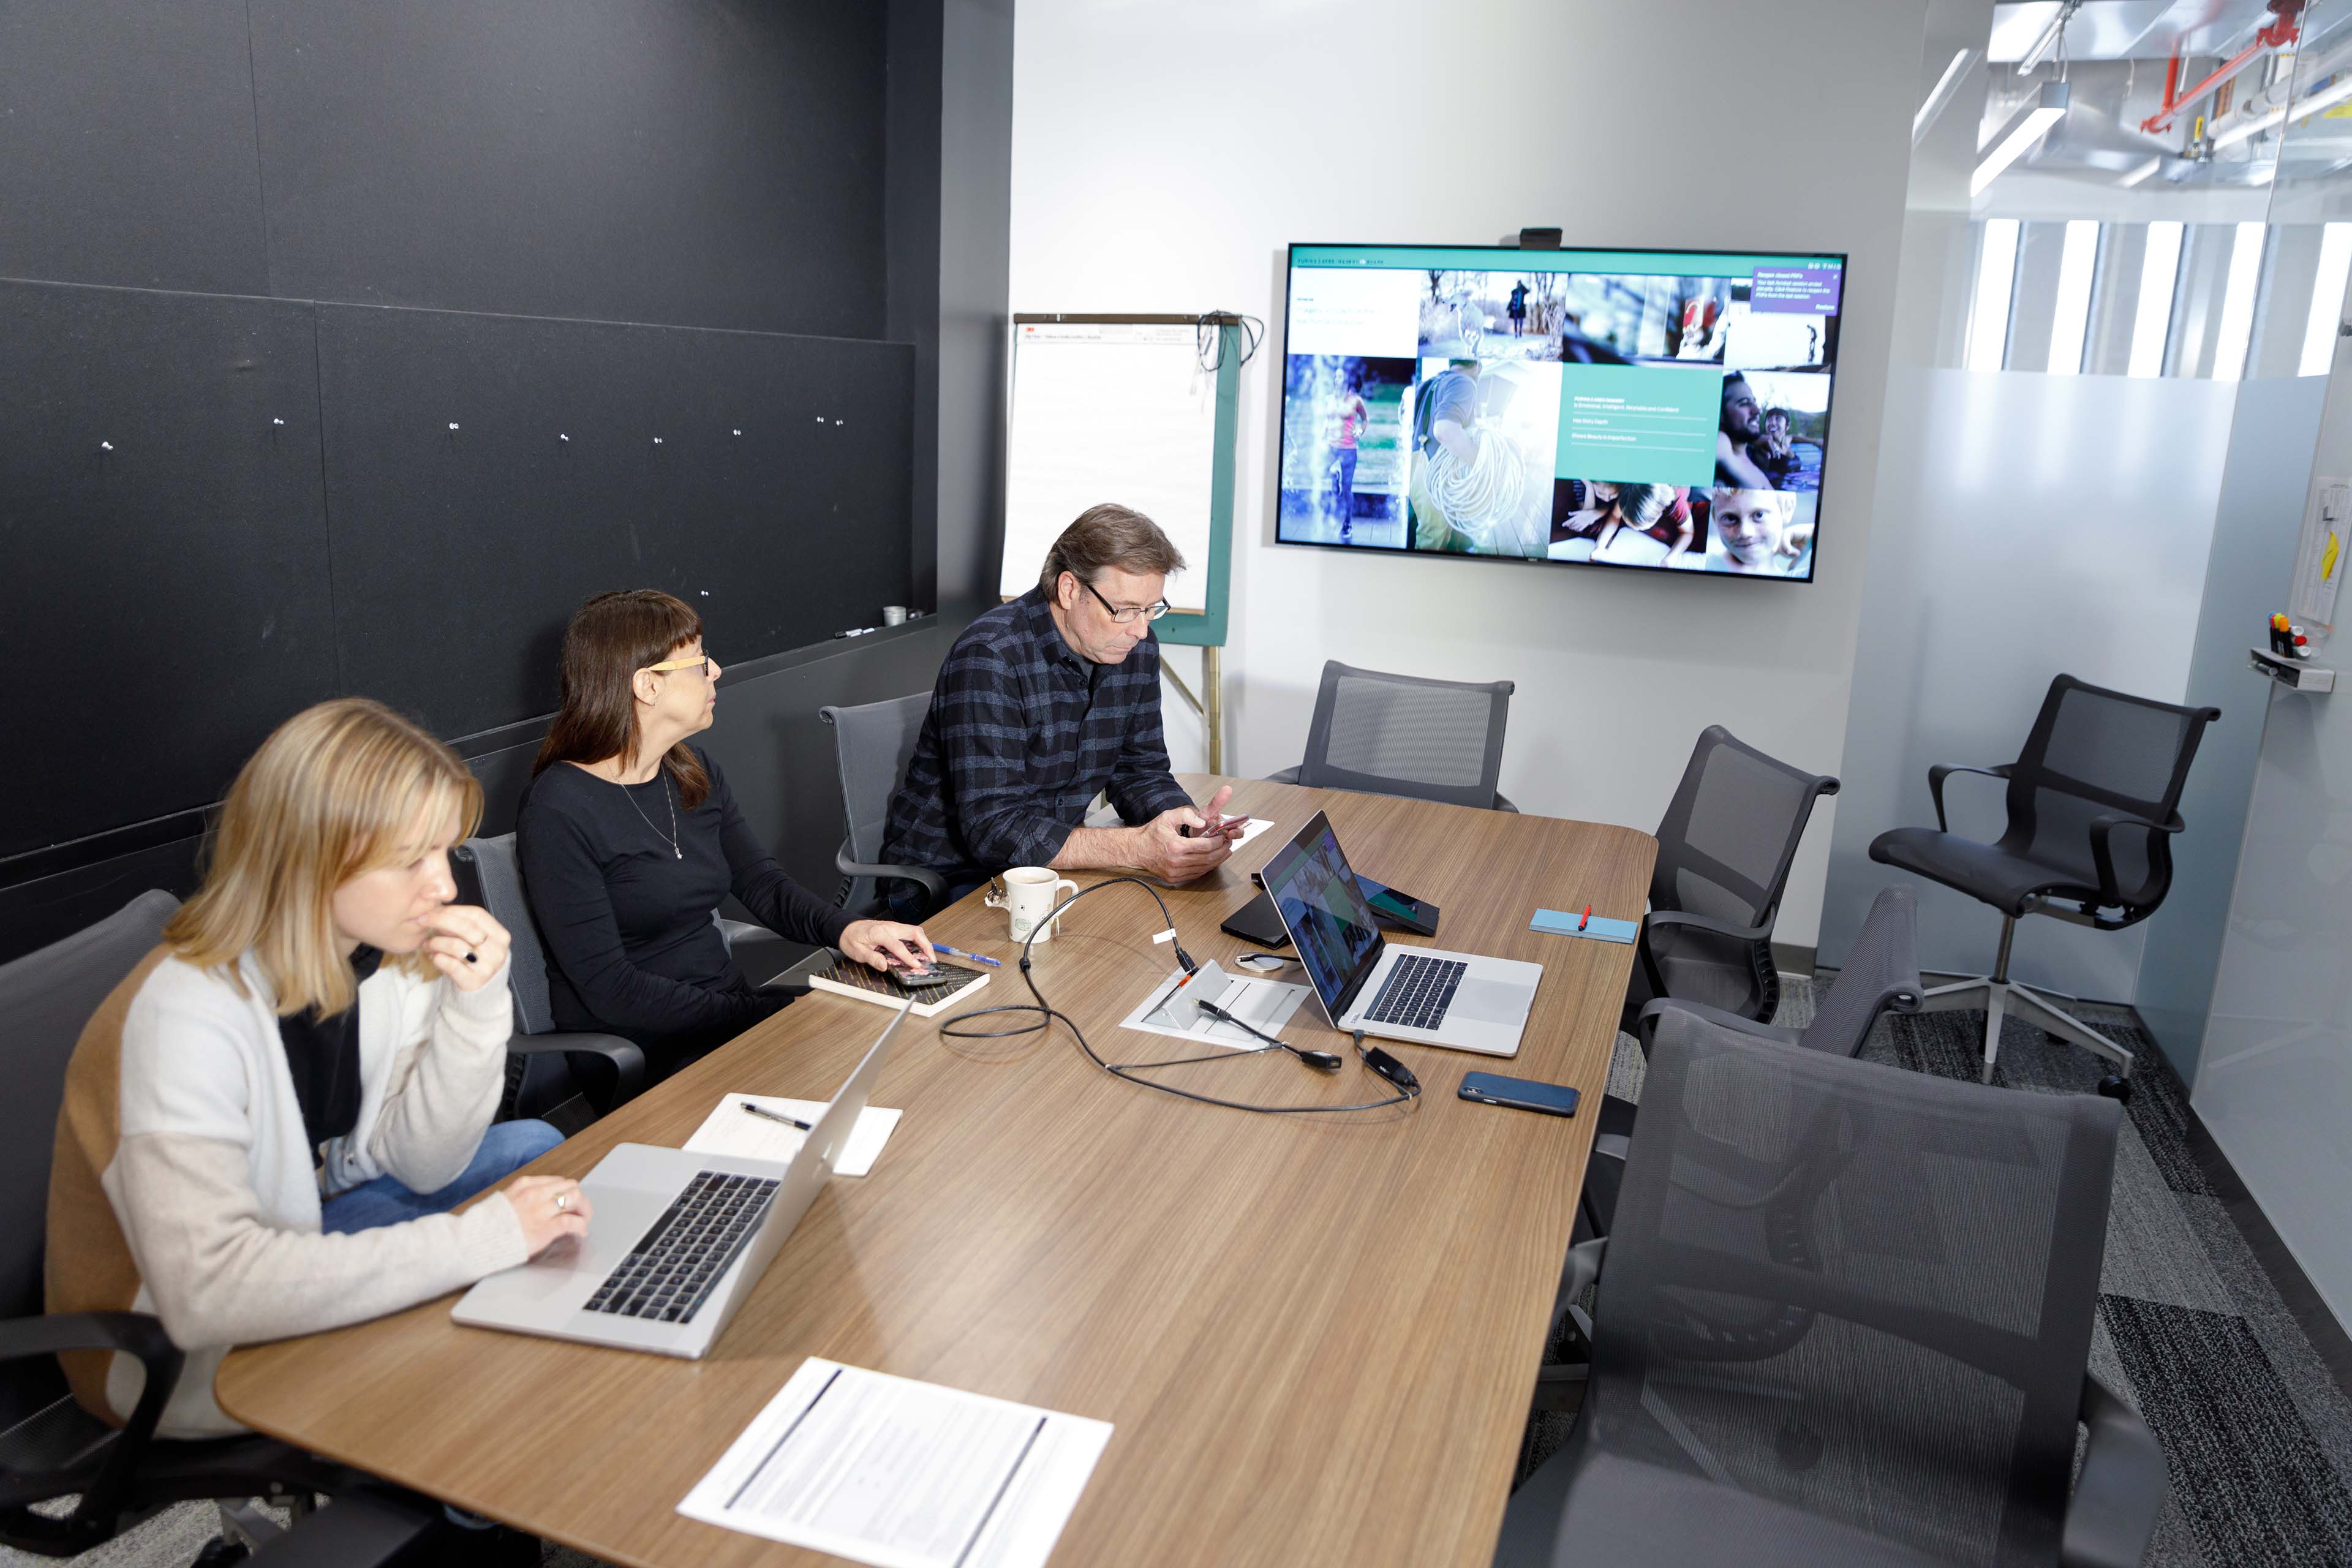 Group of people working on laptops in meeting room